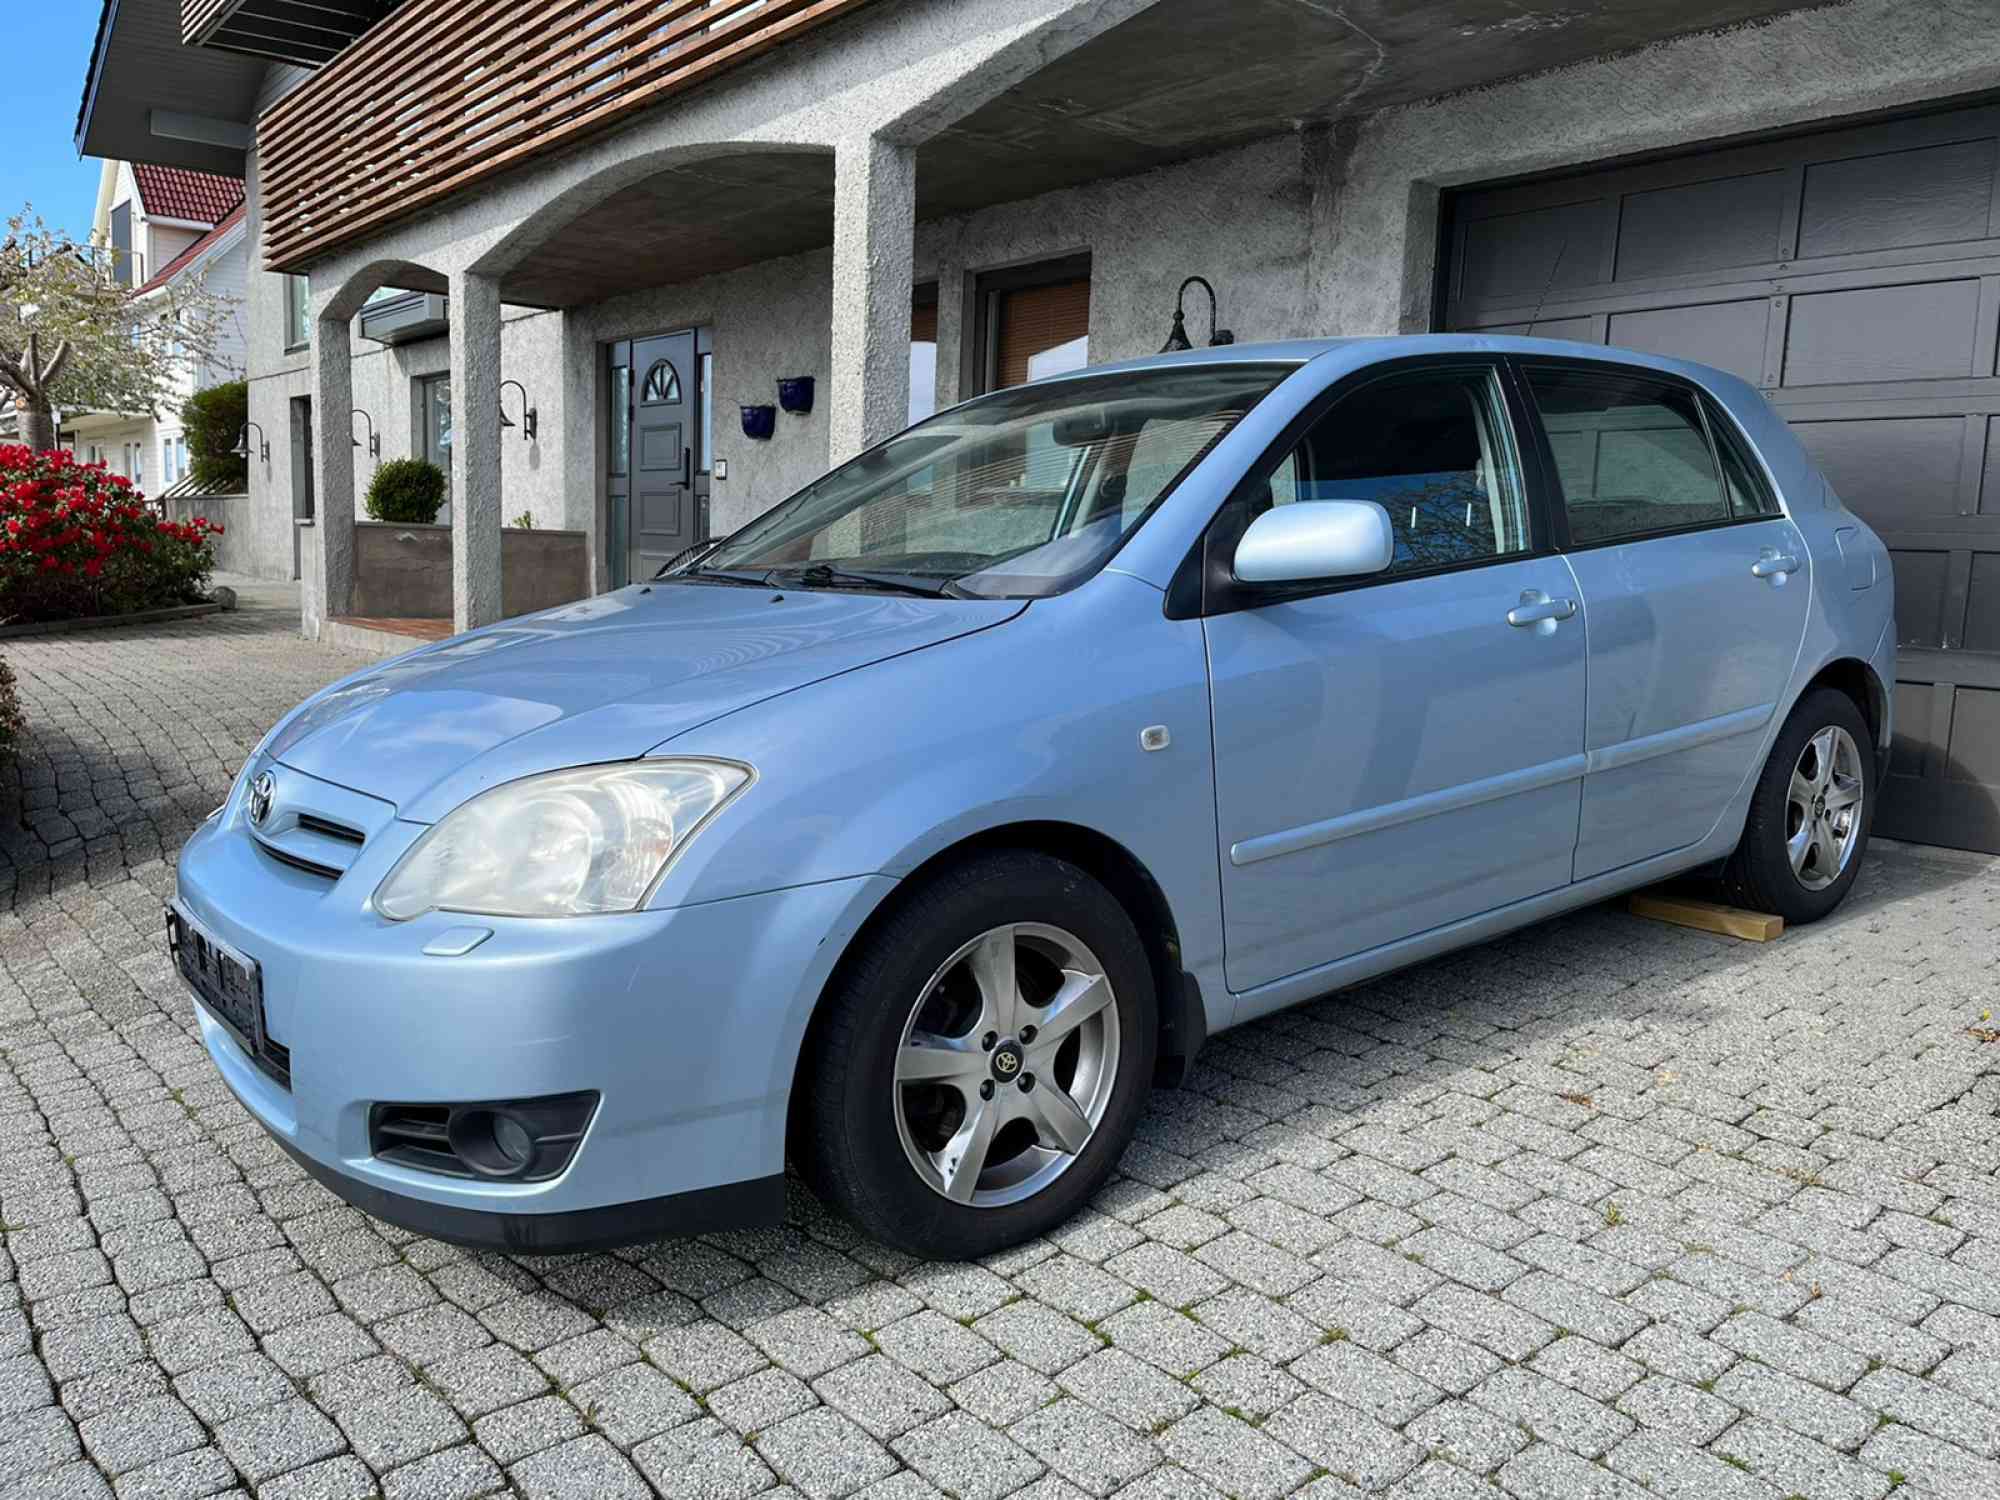 Venta de autos usados, Carros usados en venta - Todoclasificados, Toyota Corolla COROLLA año de 2006